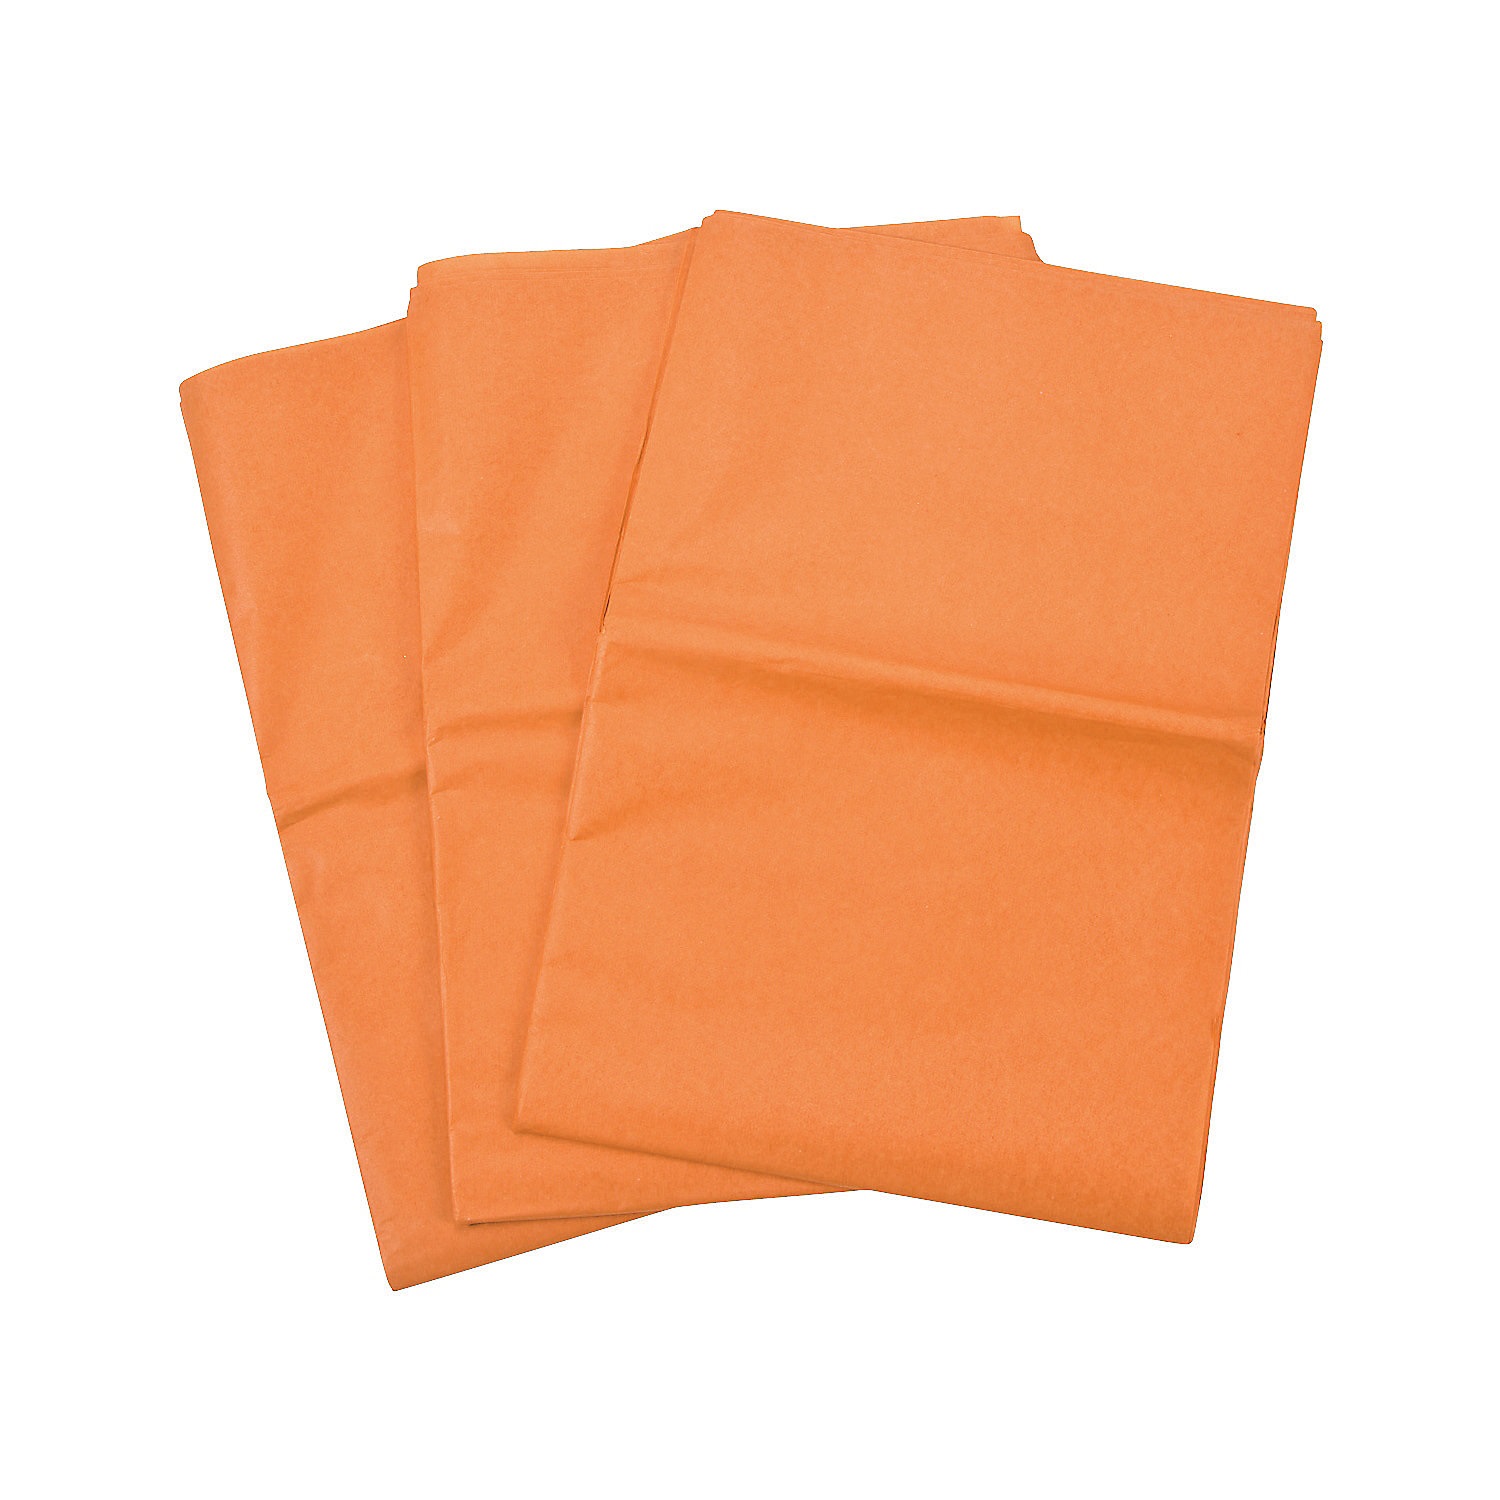 orange-tissue-paper-sheets-60-pc-_48_7367